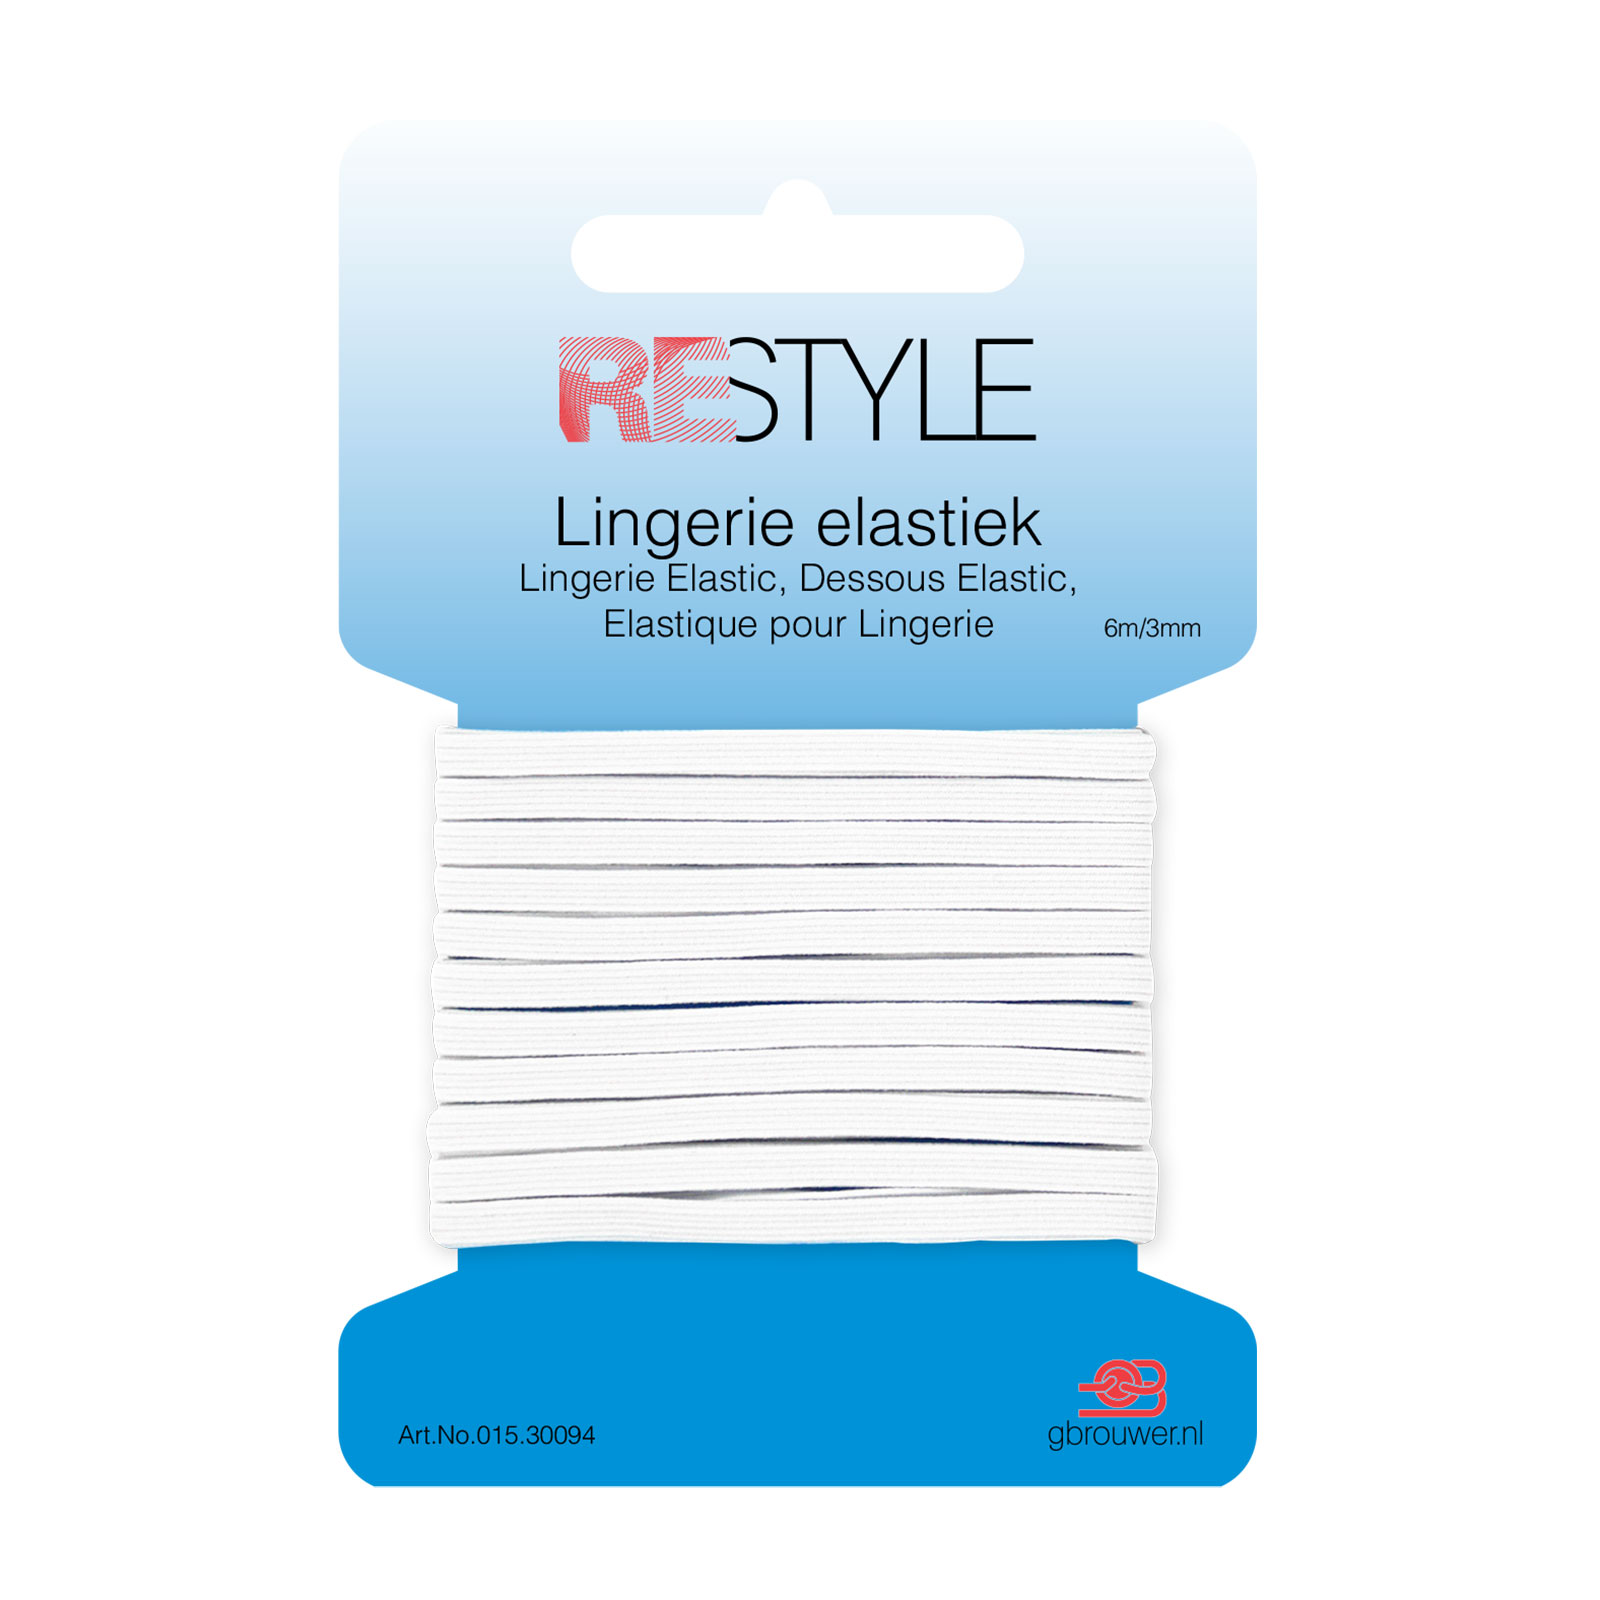 REStyle Lingerie Elastiek 3mm 6m Wit-009